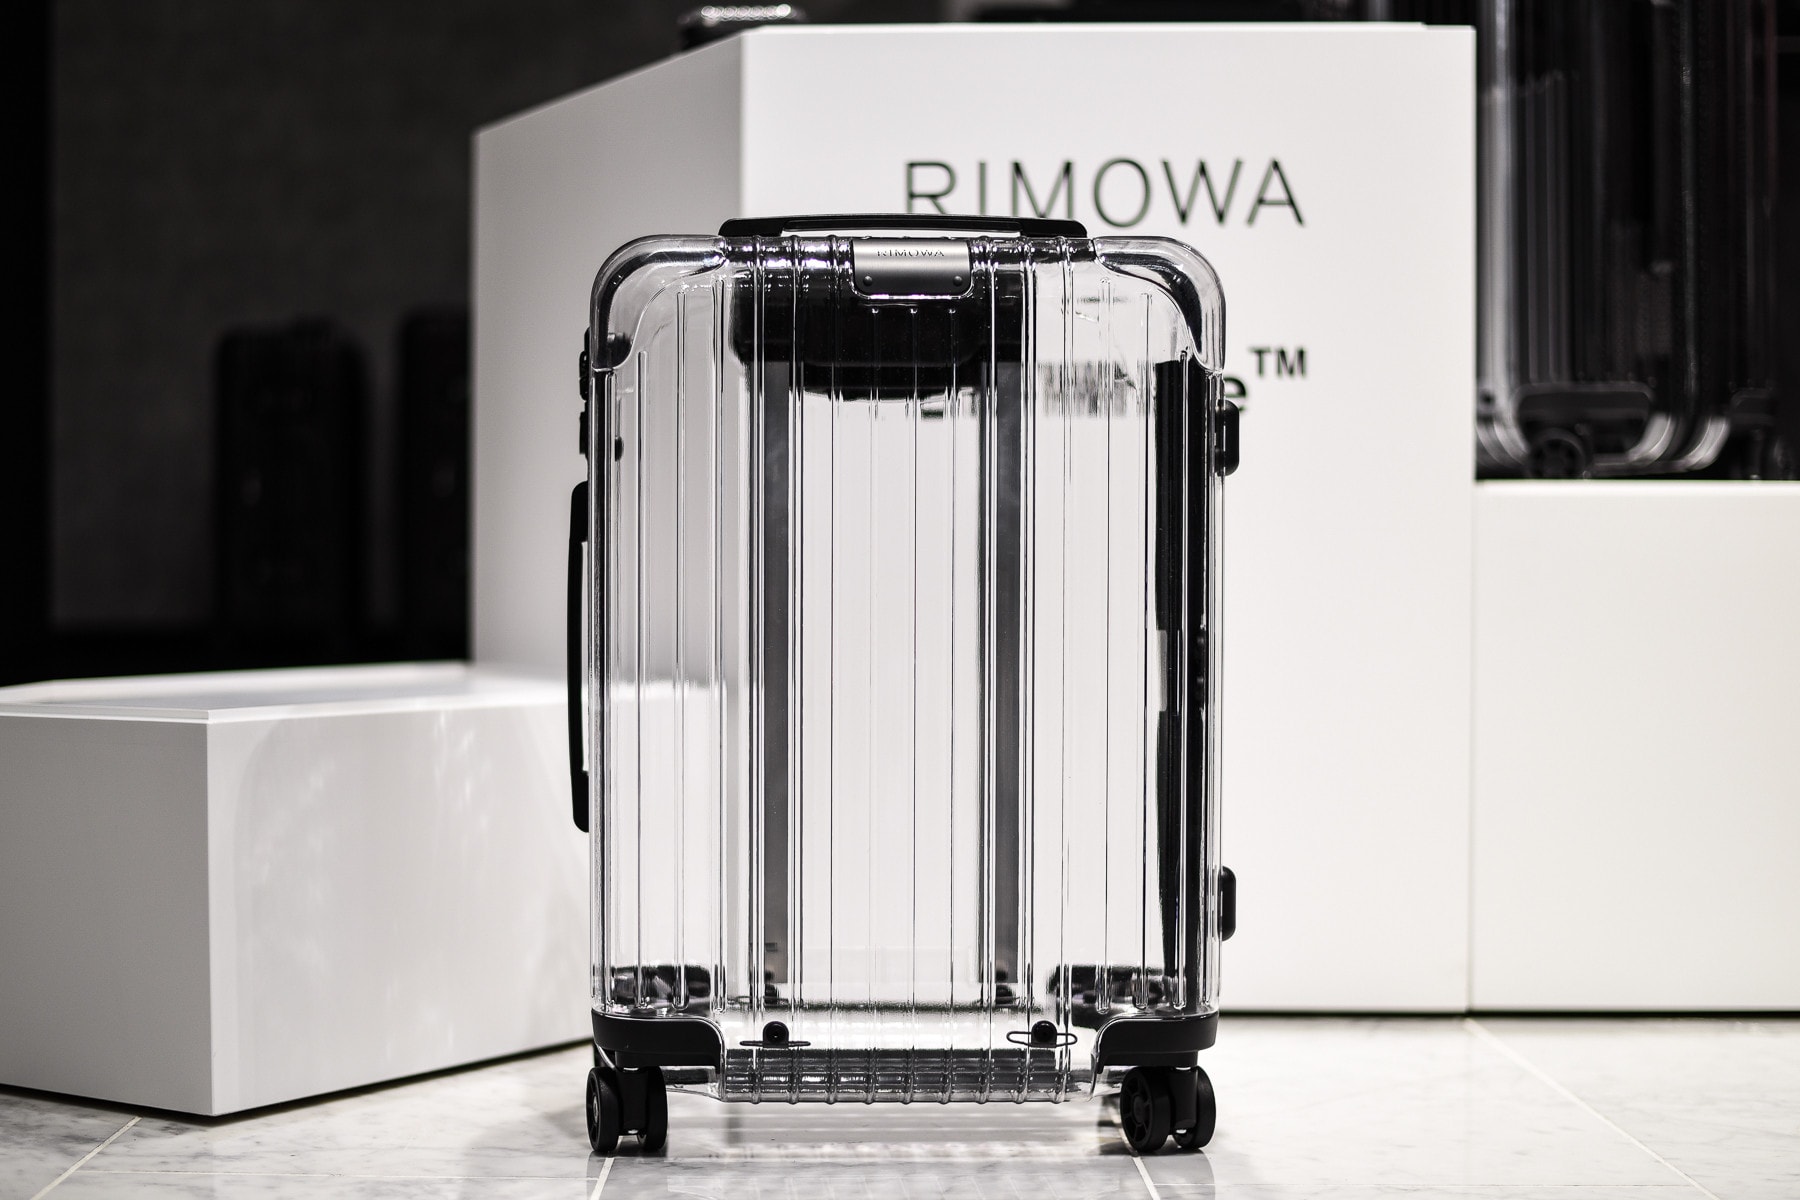 Off-White™ x RIMOWA Luggage Closer Look | Hypebeast